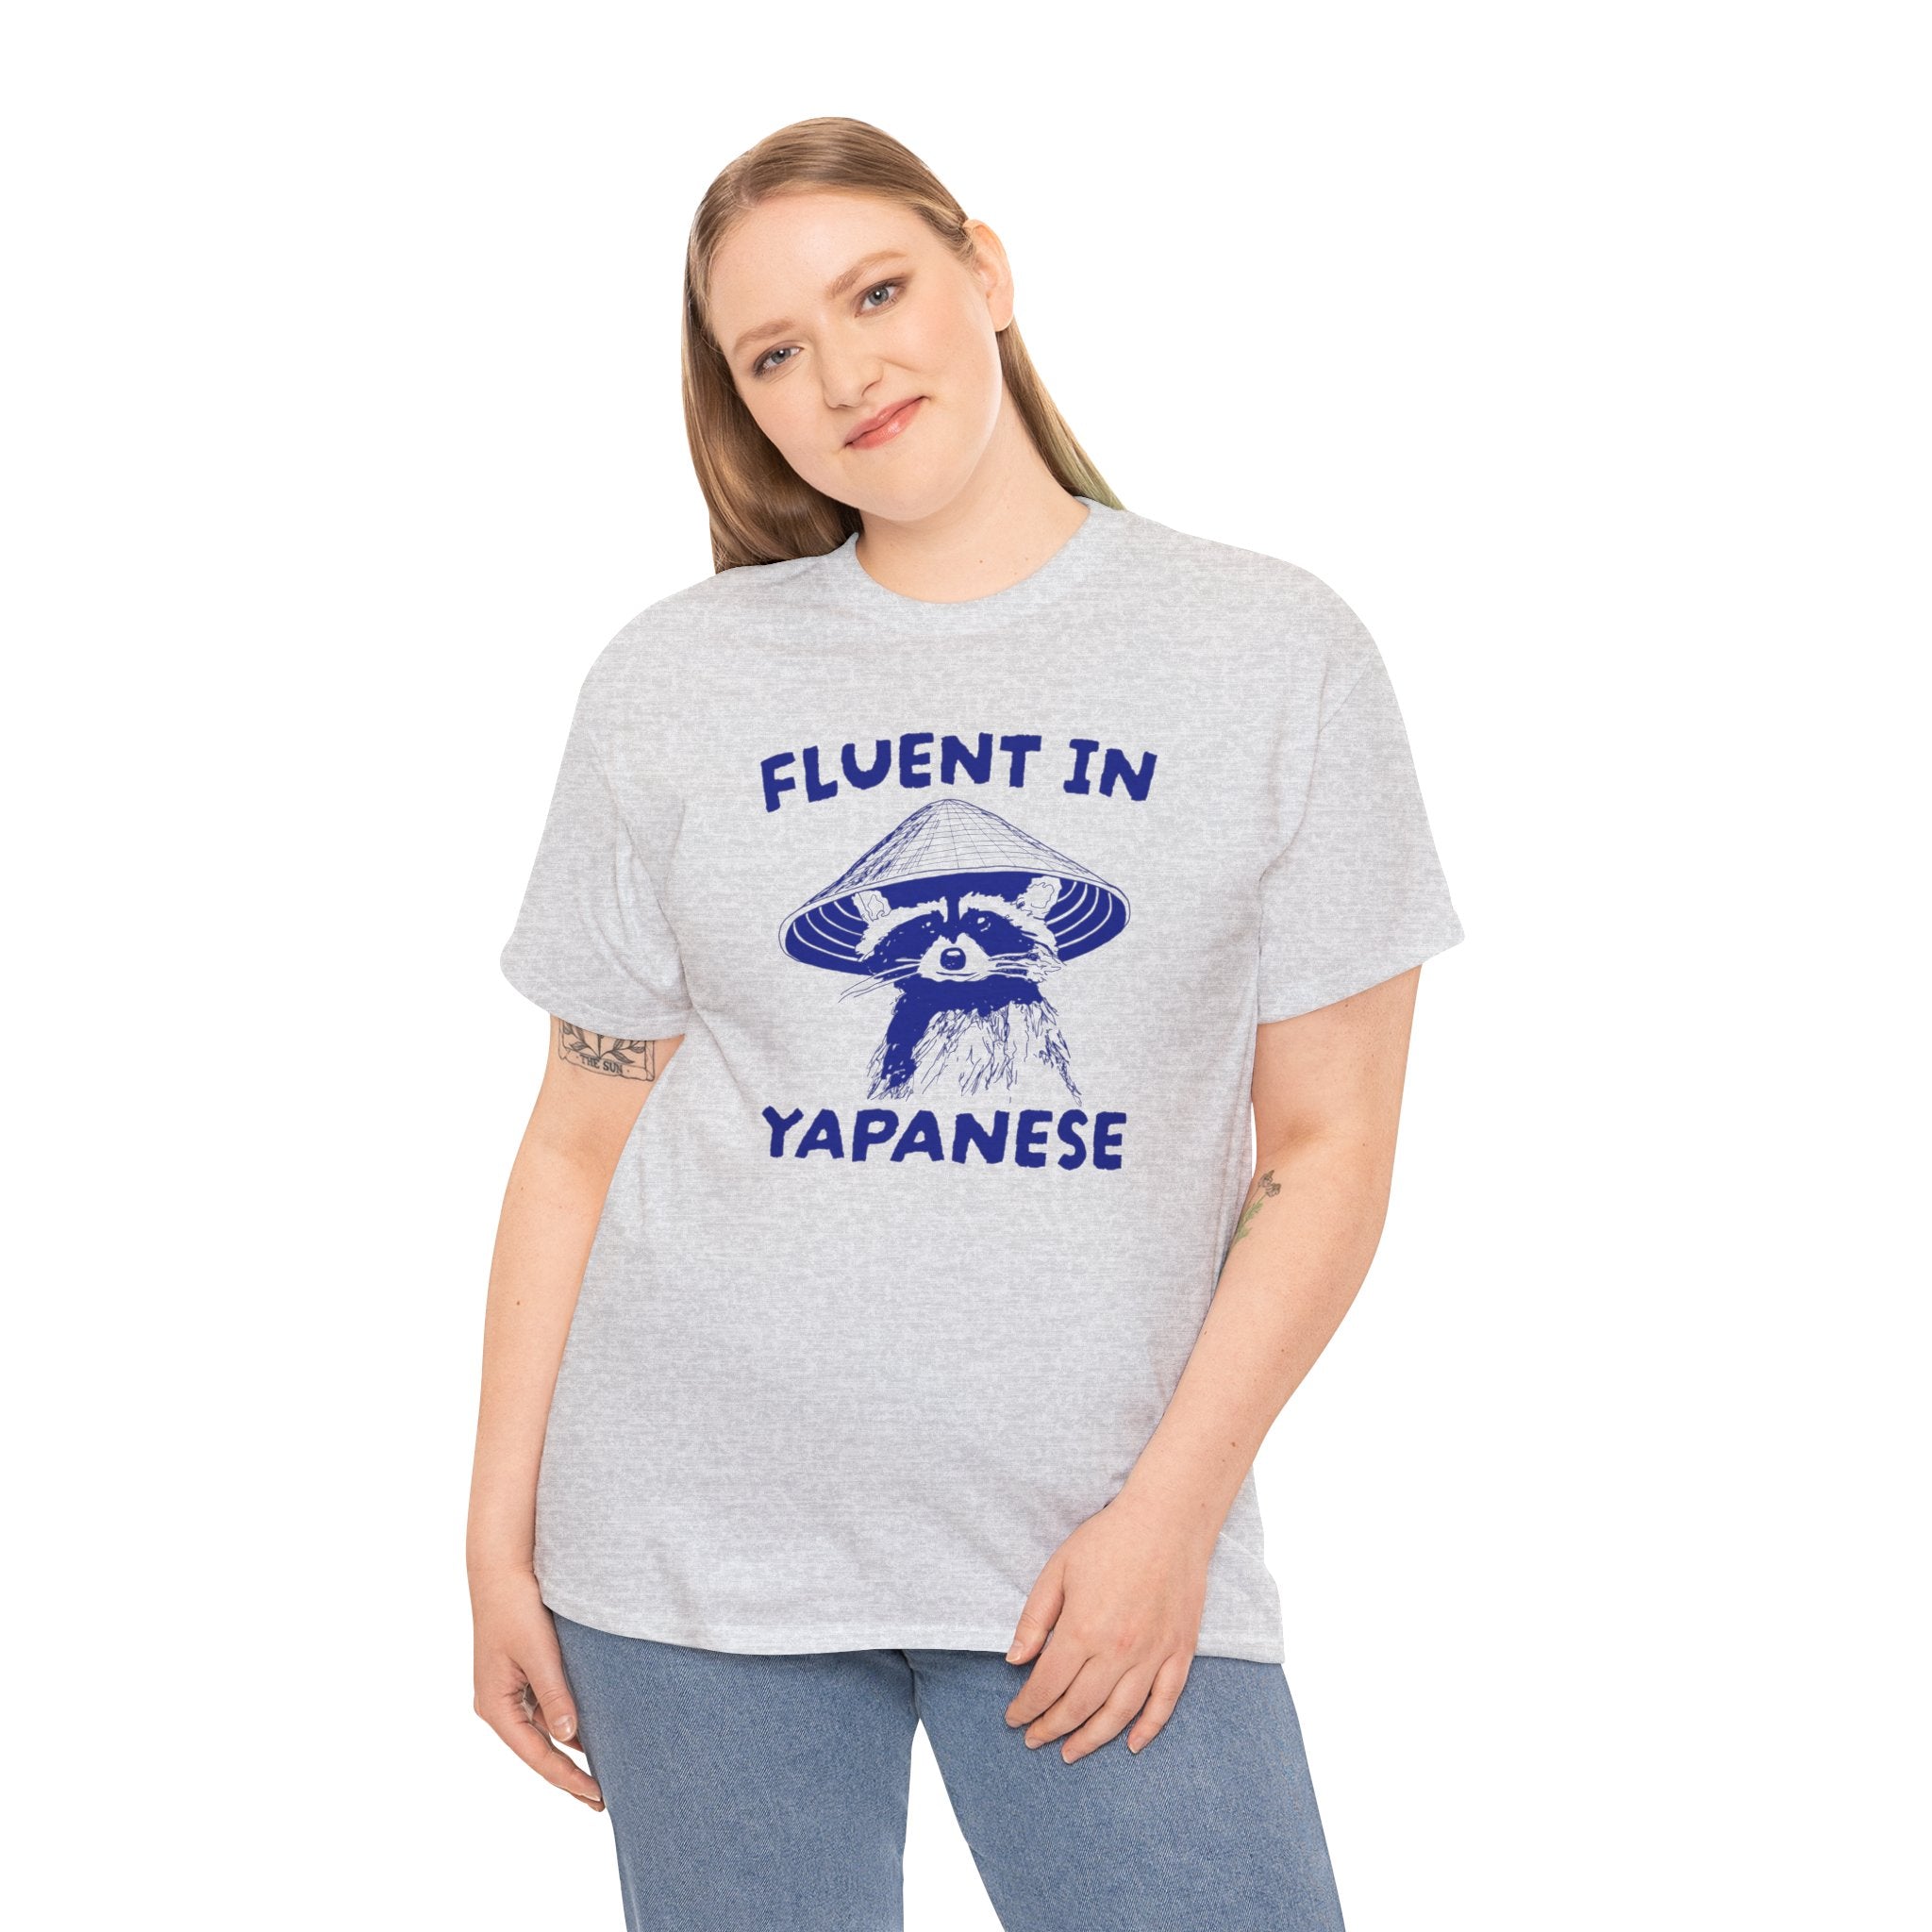 Fluent in Yapanese Shirt